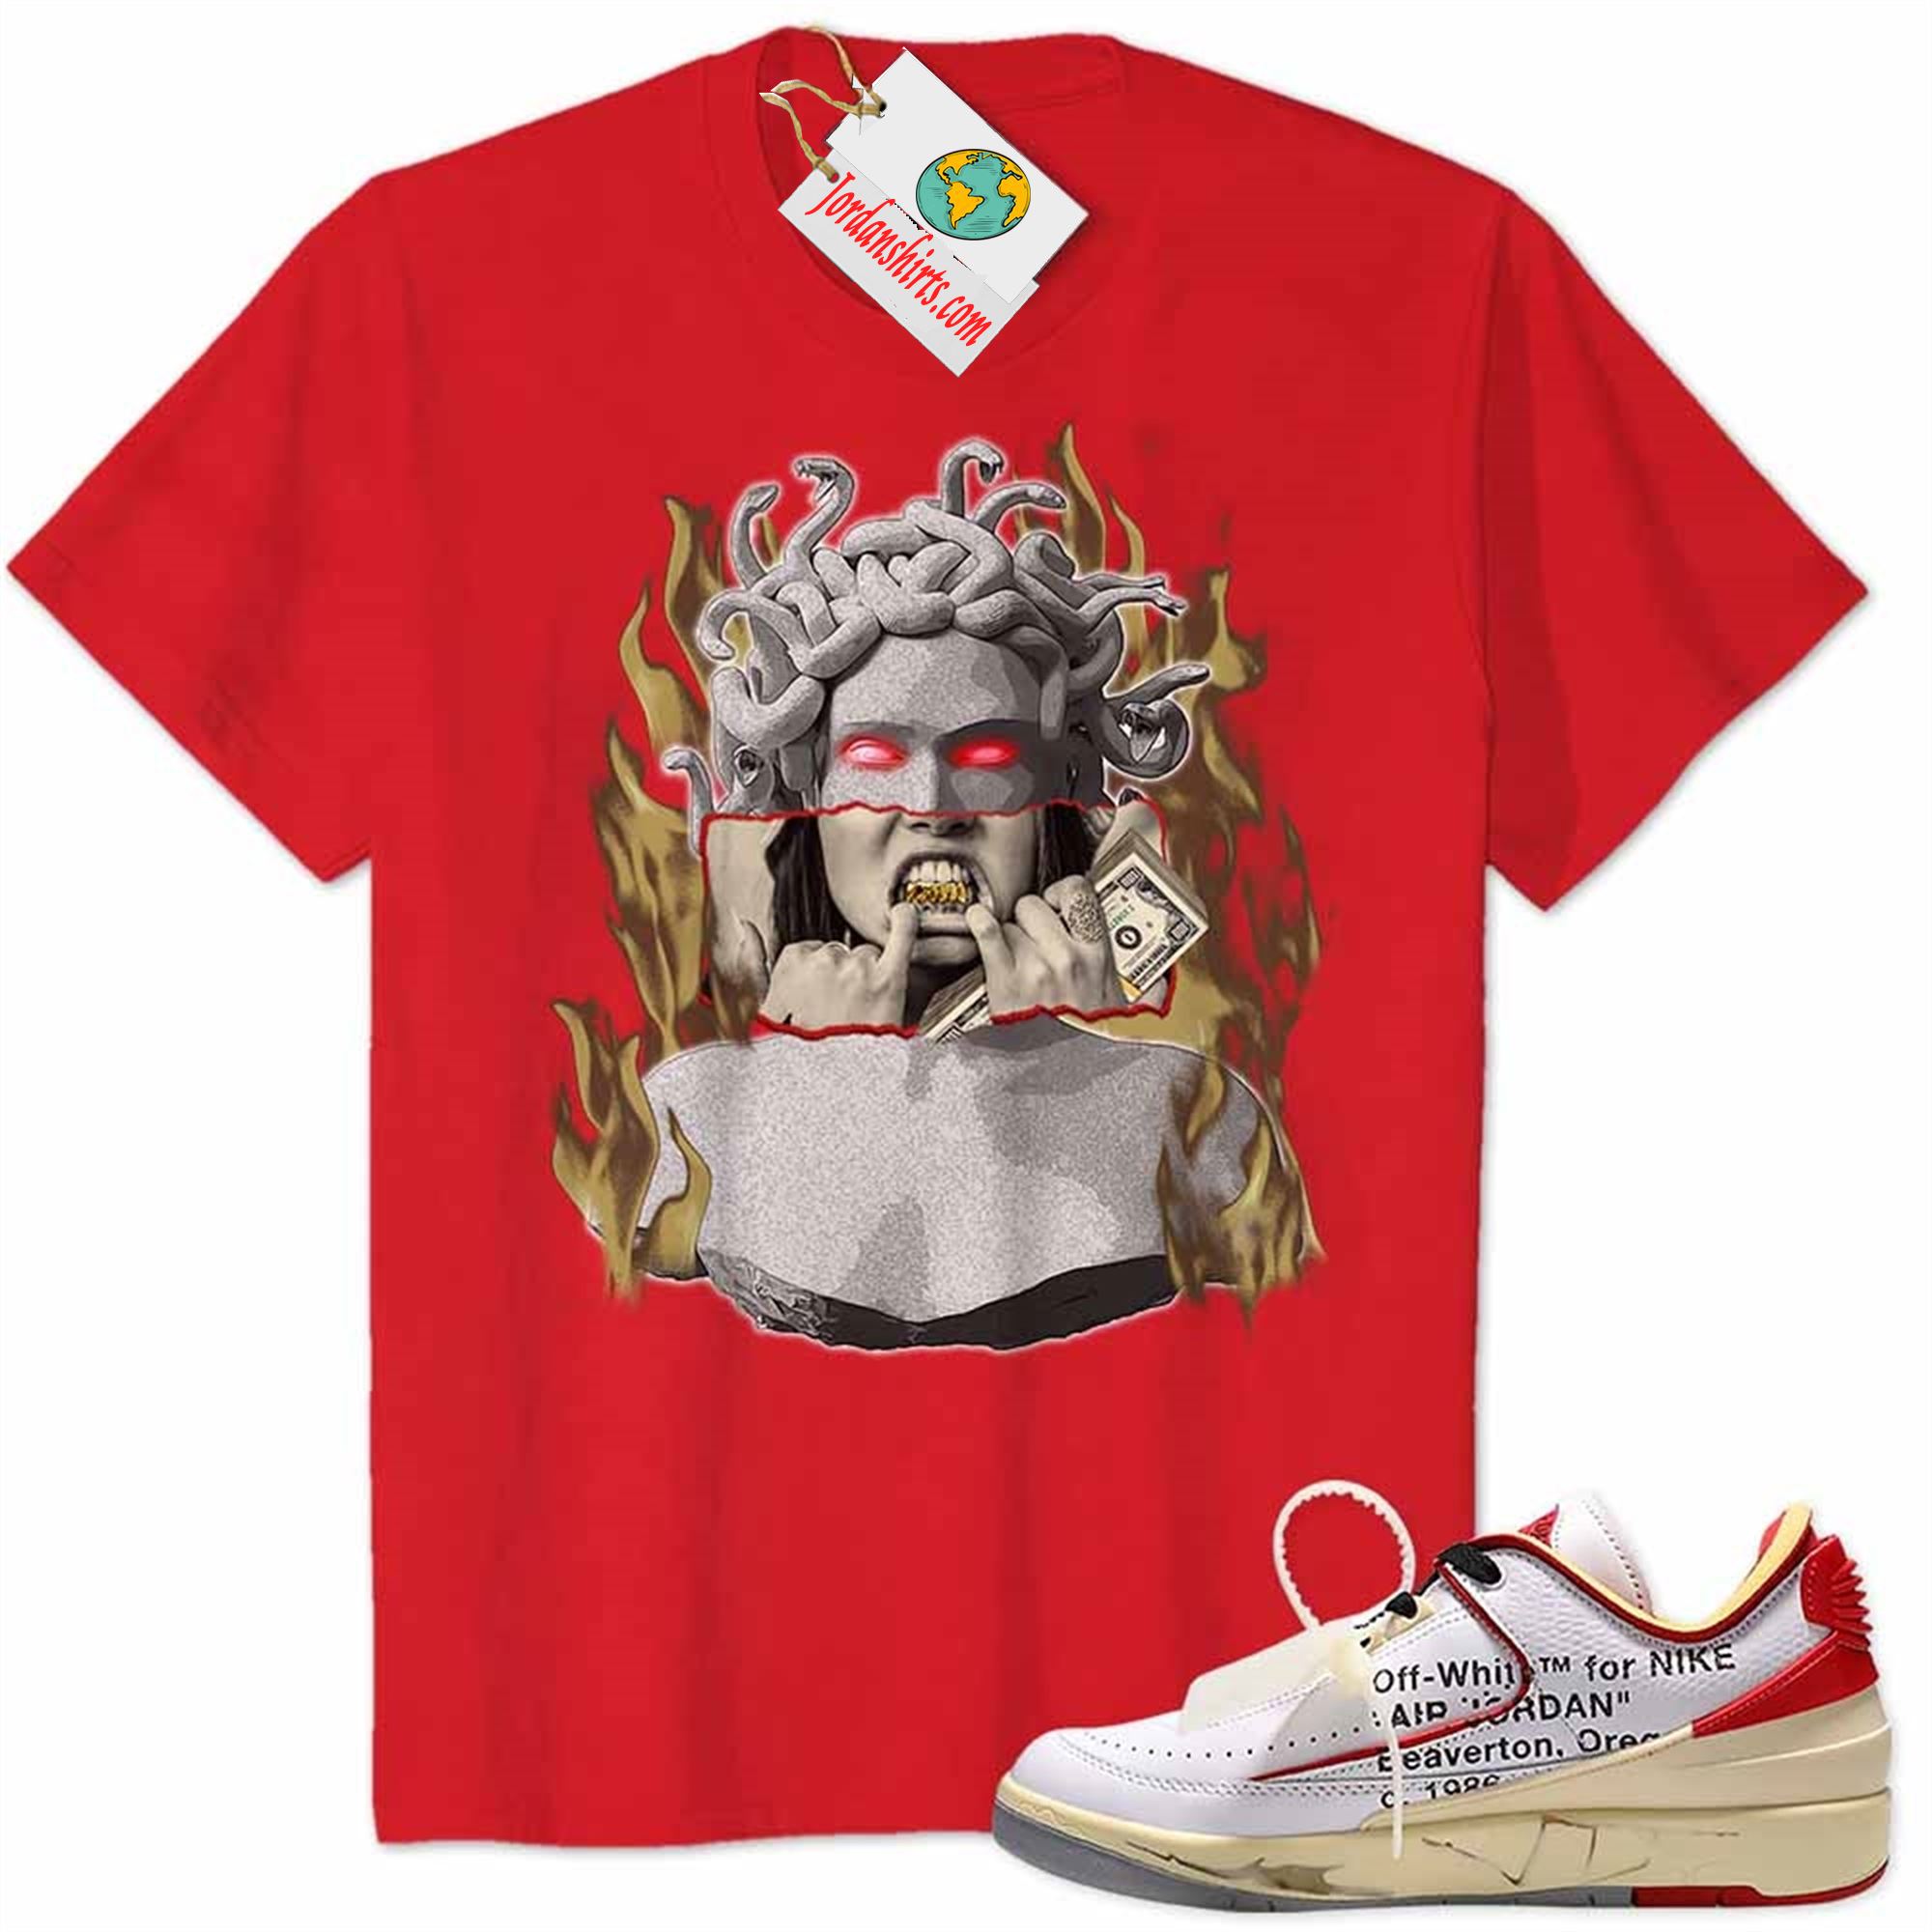 Jordan 2 Shirt, Medusa Grillz Money Fire Red Air Jordan 2 Low White Red Off-white 2s Plus Size Up To 5xl